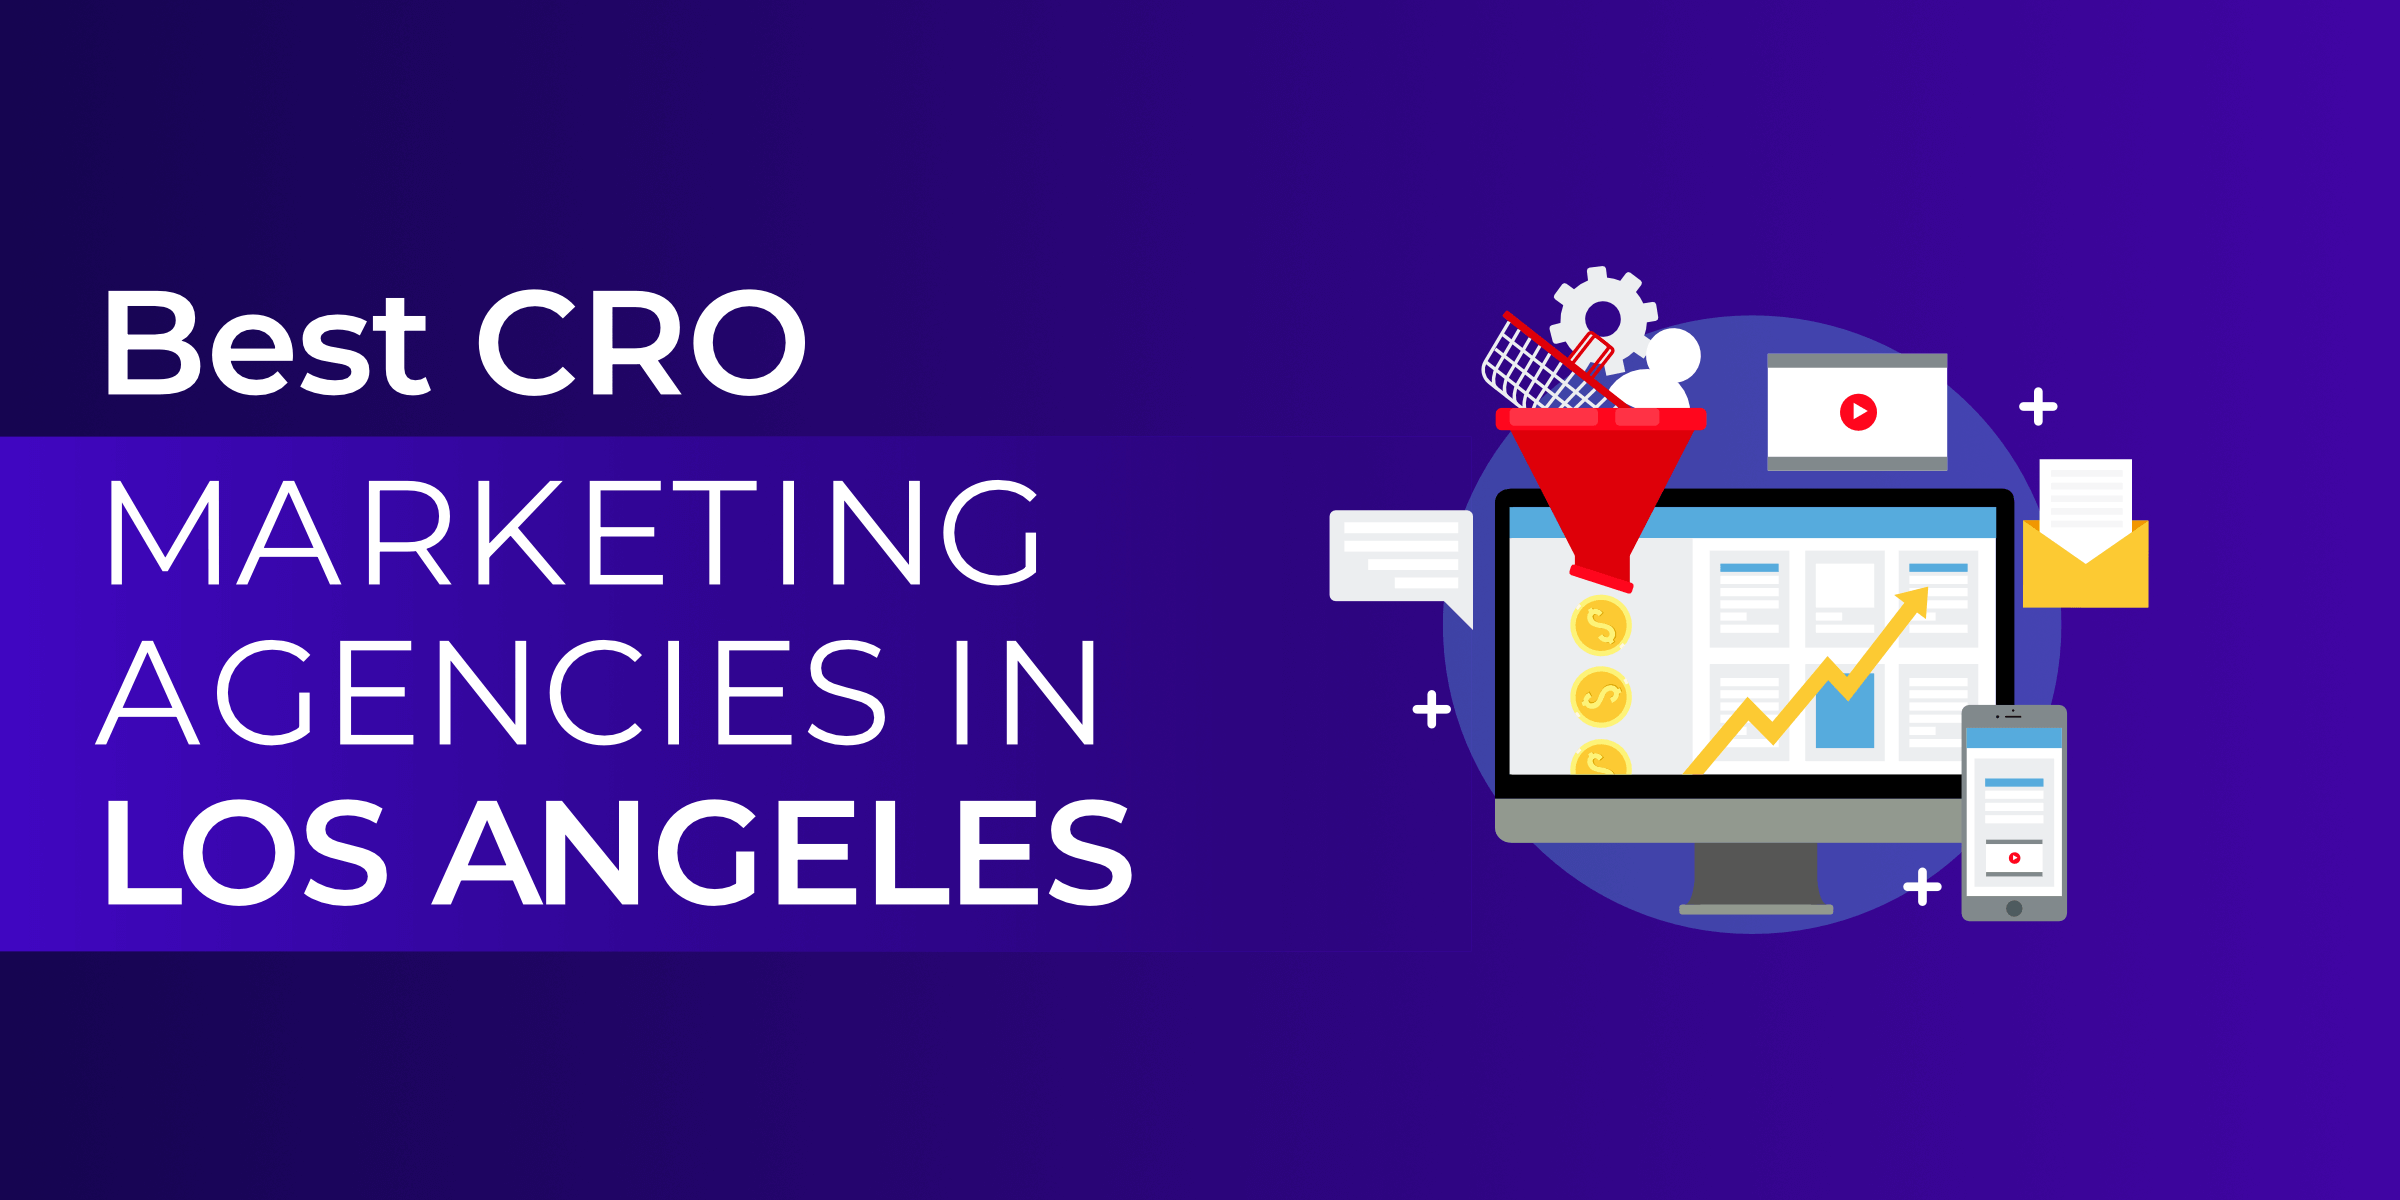 Best CRO Marketing Agencies in Los Angeles